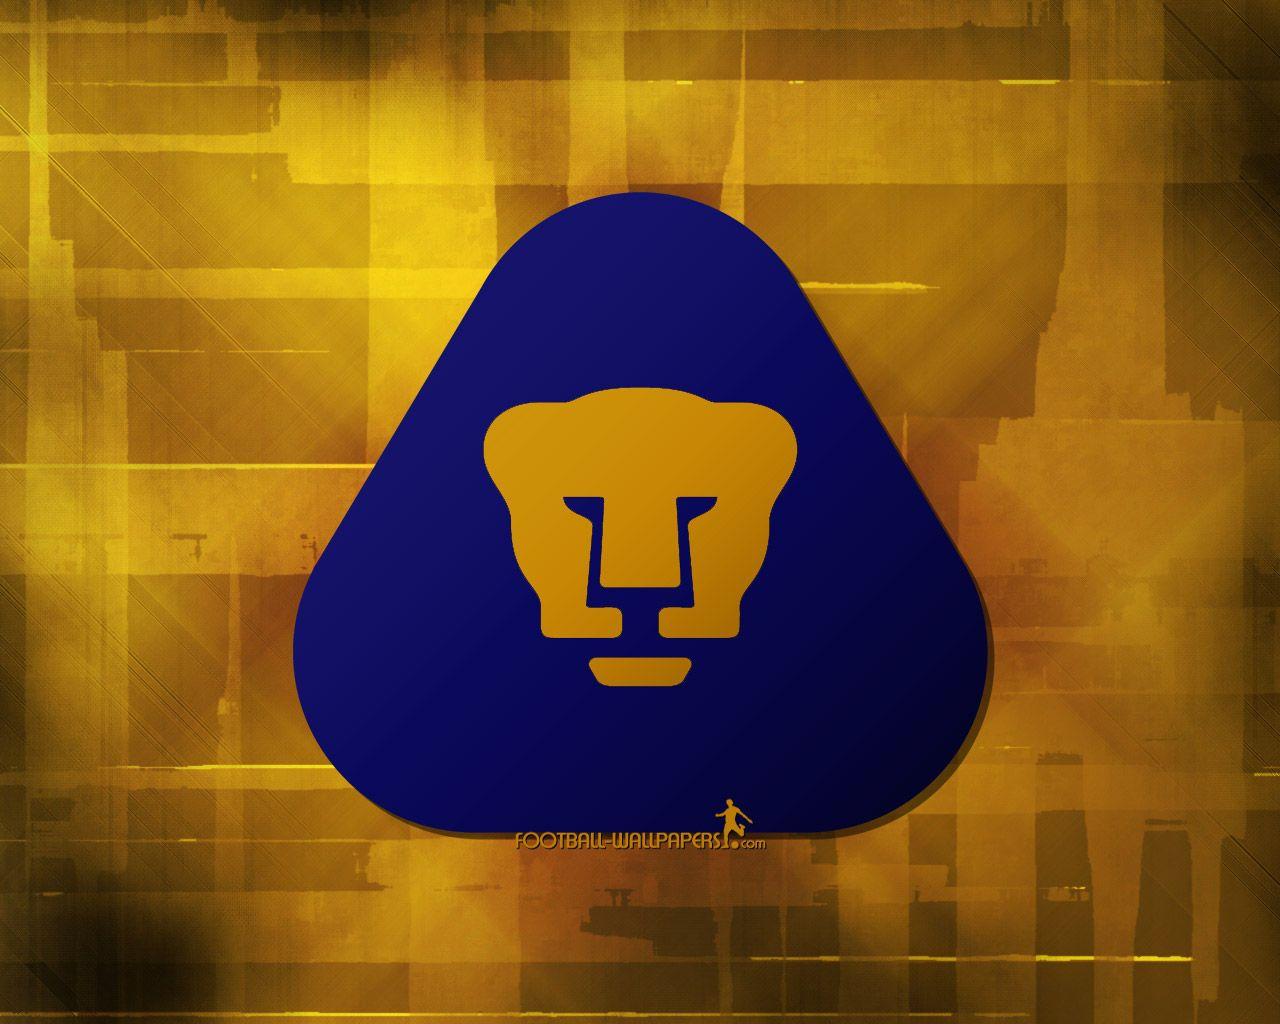 Pumas Unam Logo Wallpaper: Players, Teams, Leagues Wallpaper